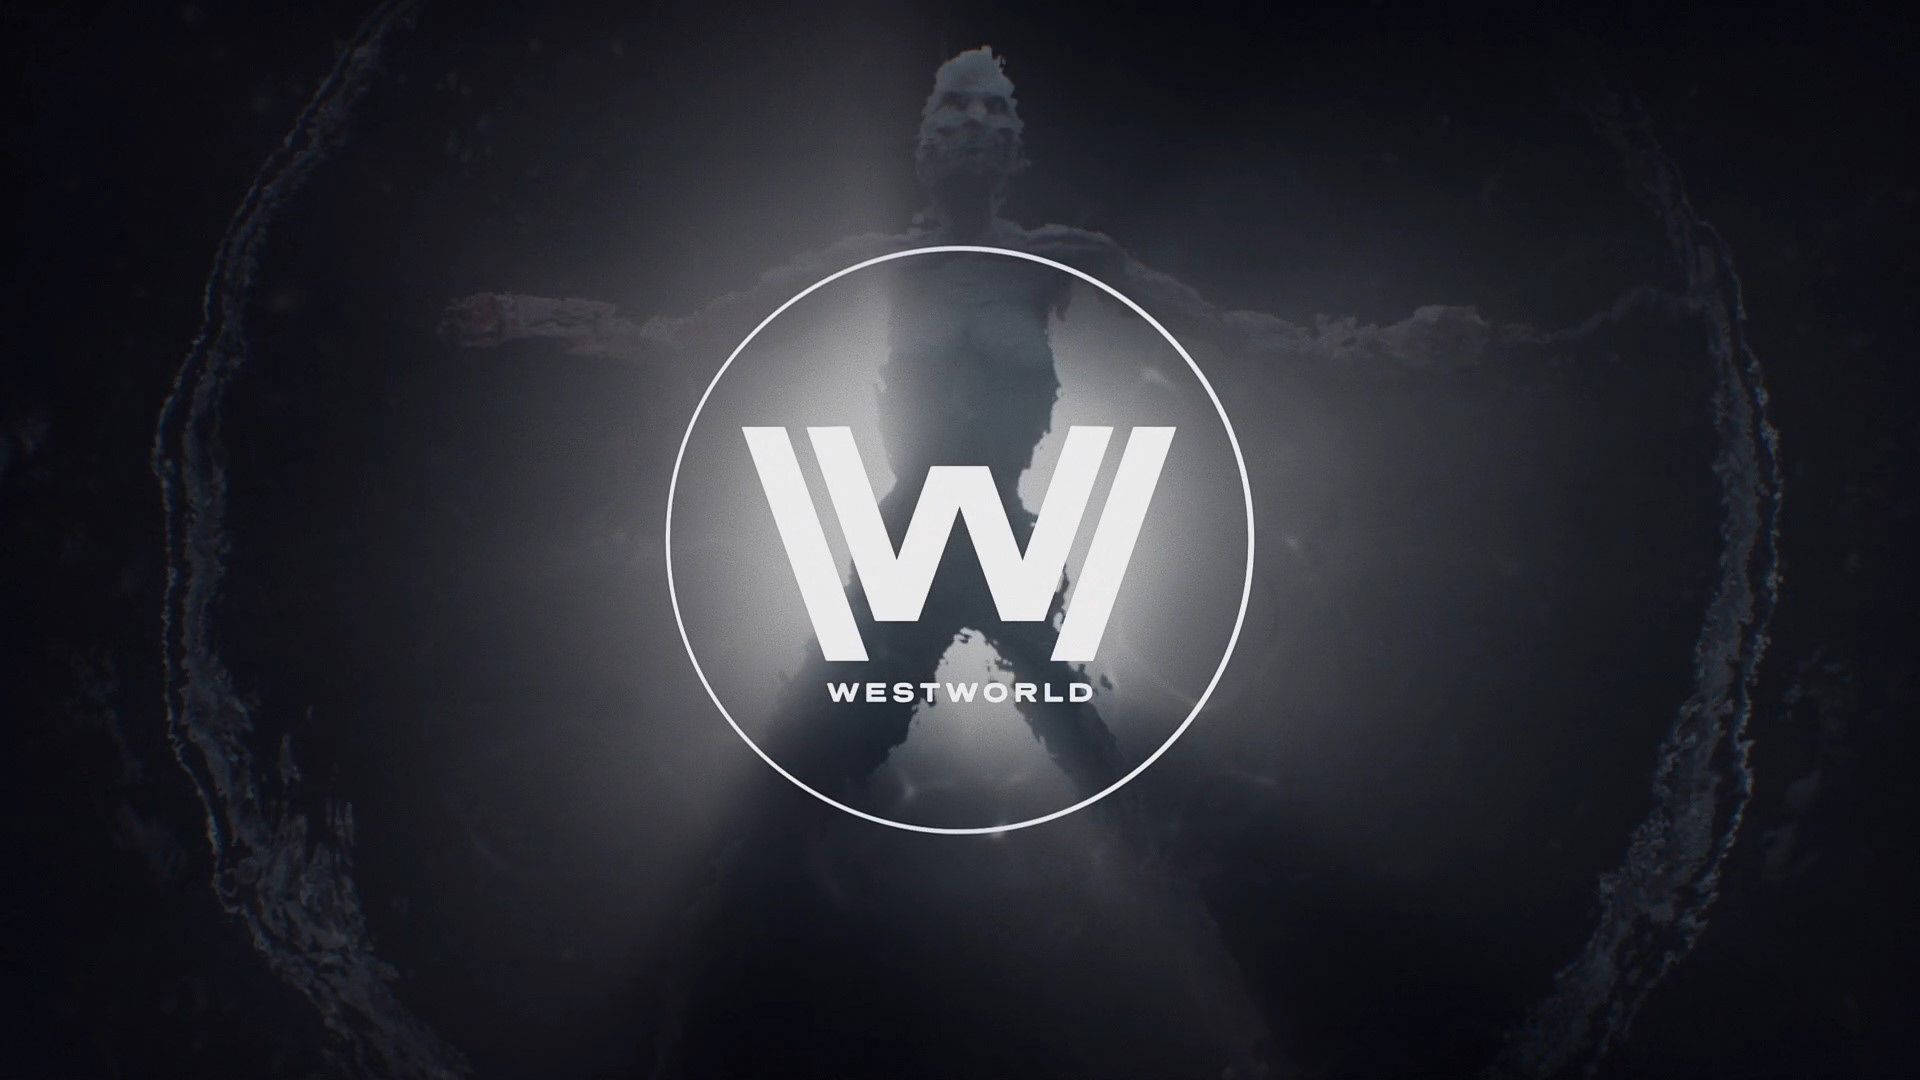 Westworld Symbol With Robot Wallpaper